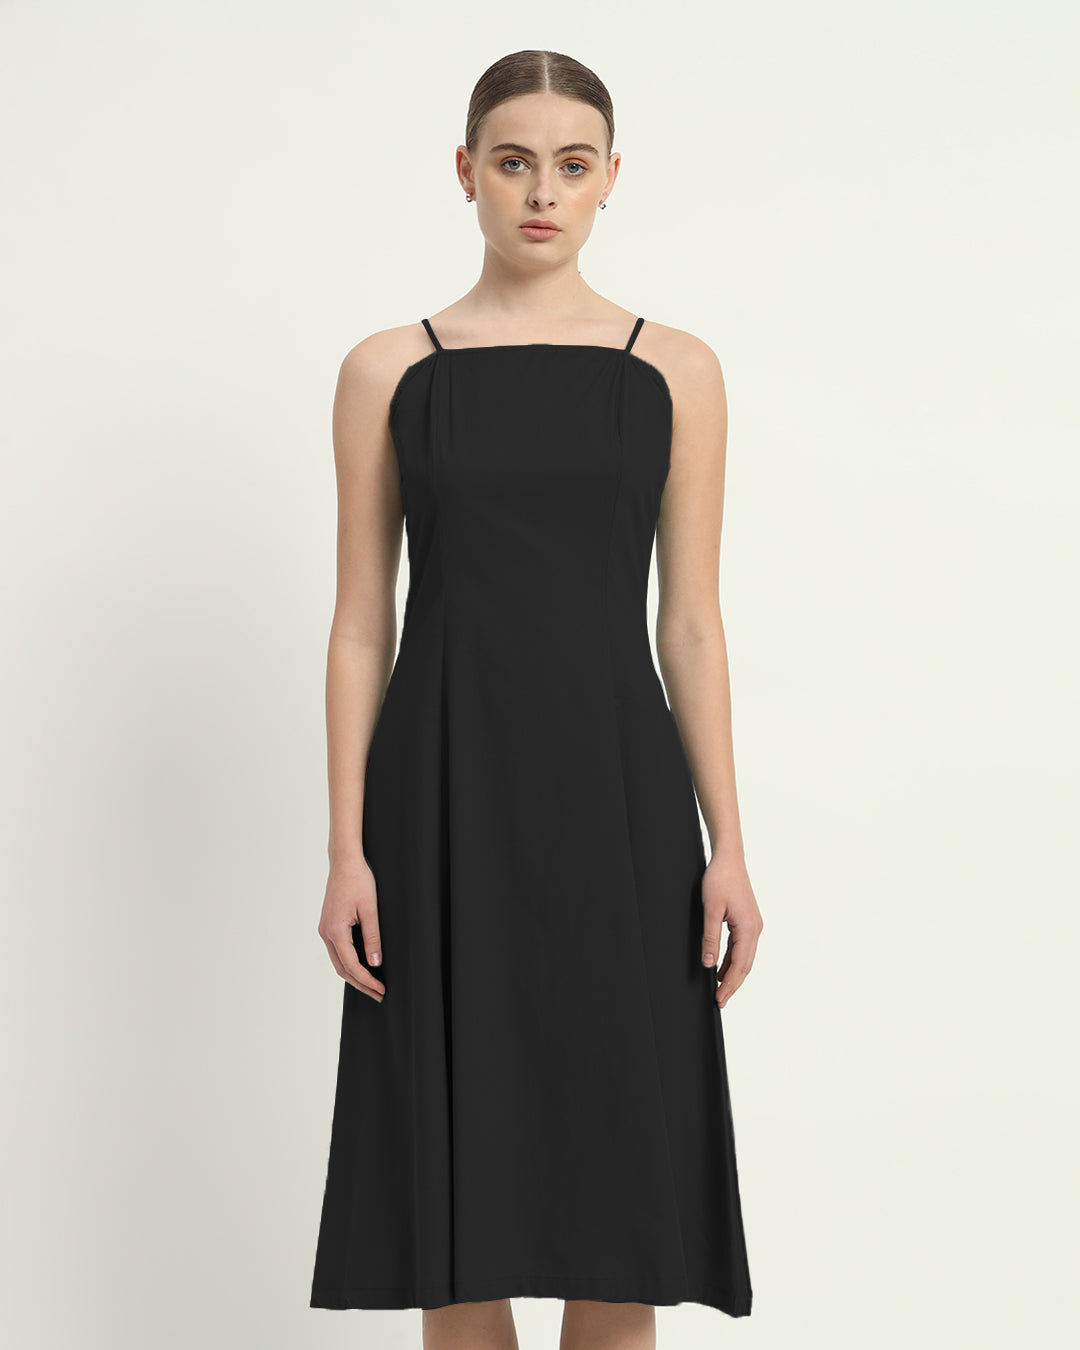 The Noir Valatie Cotton Dress